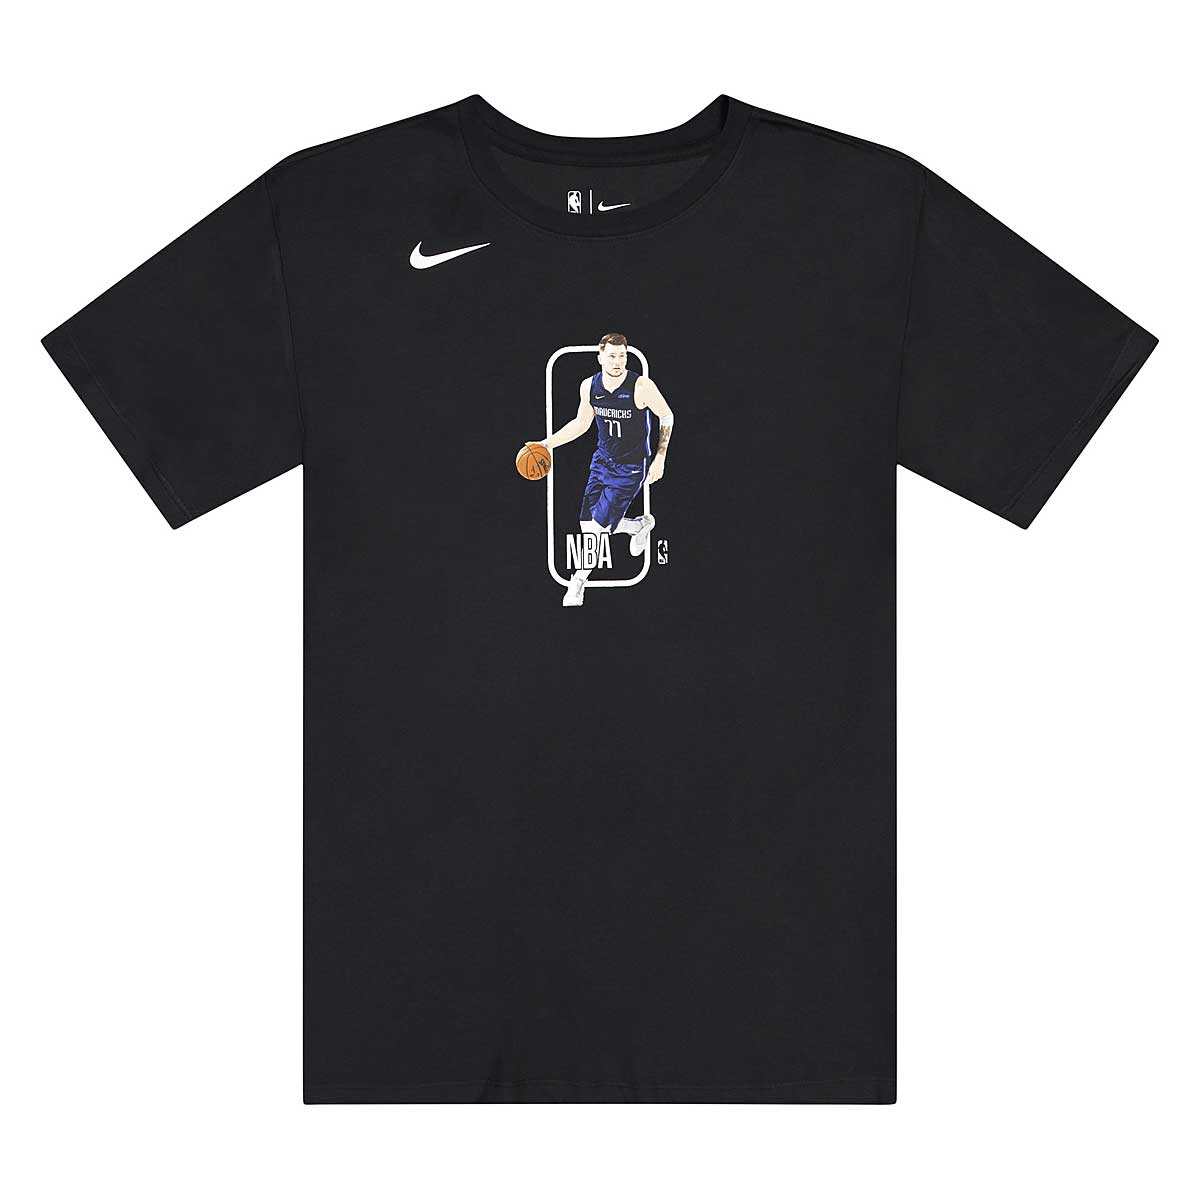 Buy NBA Luka Doncic Mavericks T-Shirt for N/A 0.0 on KICKZ.com!